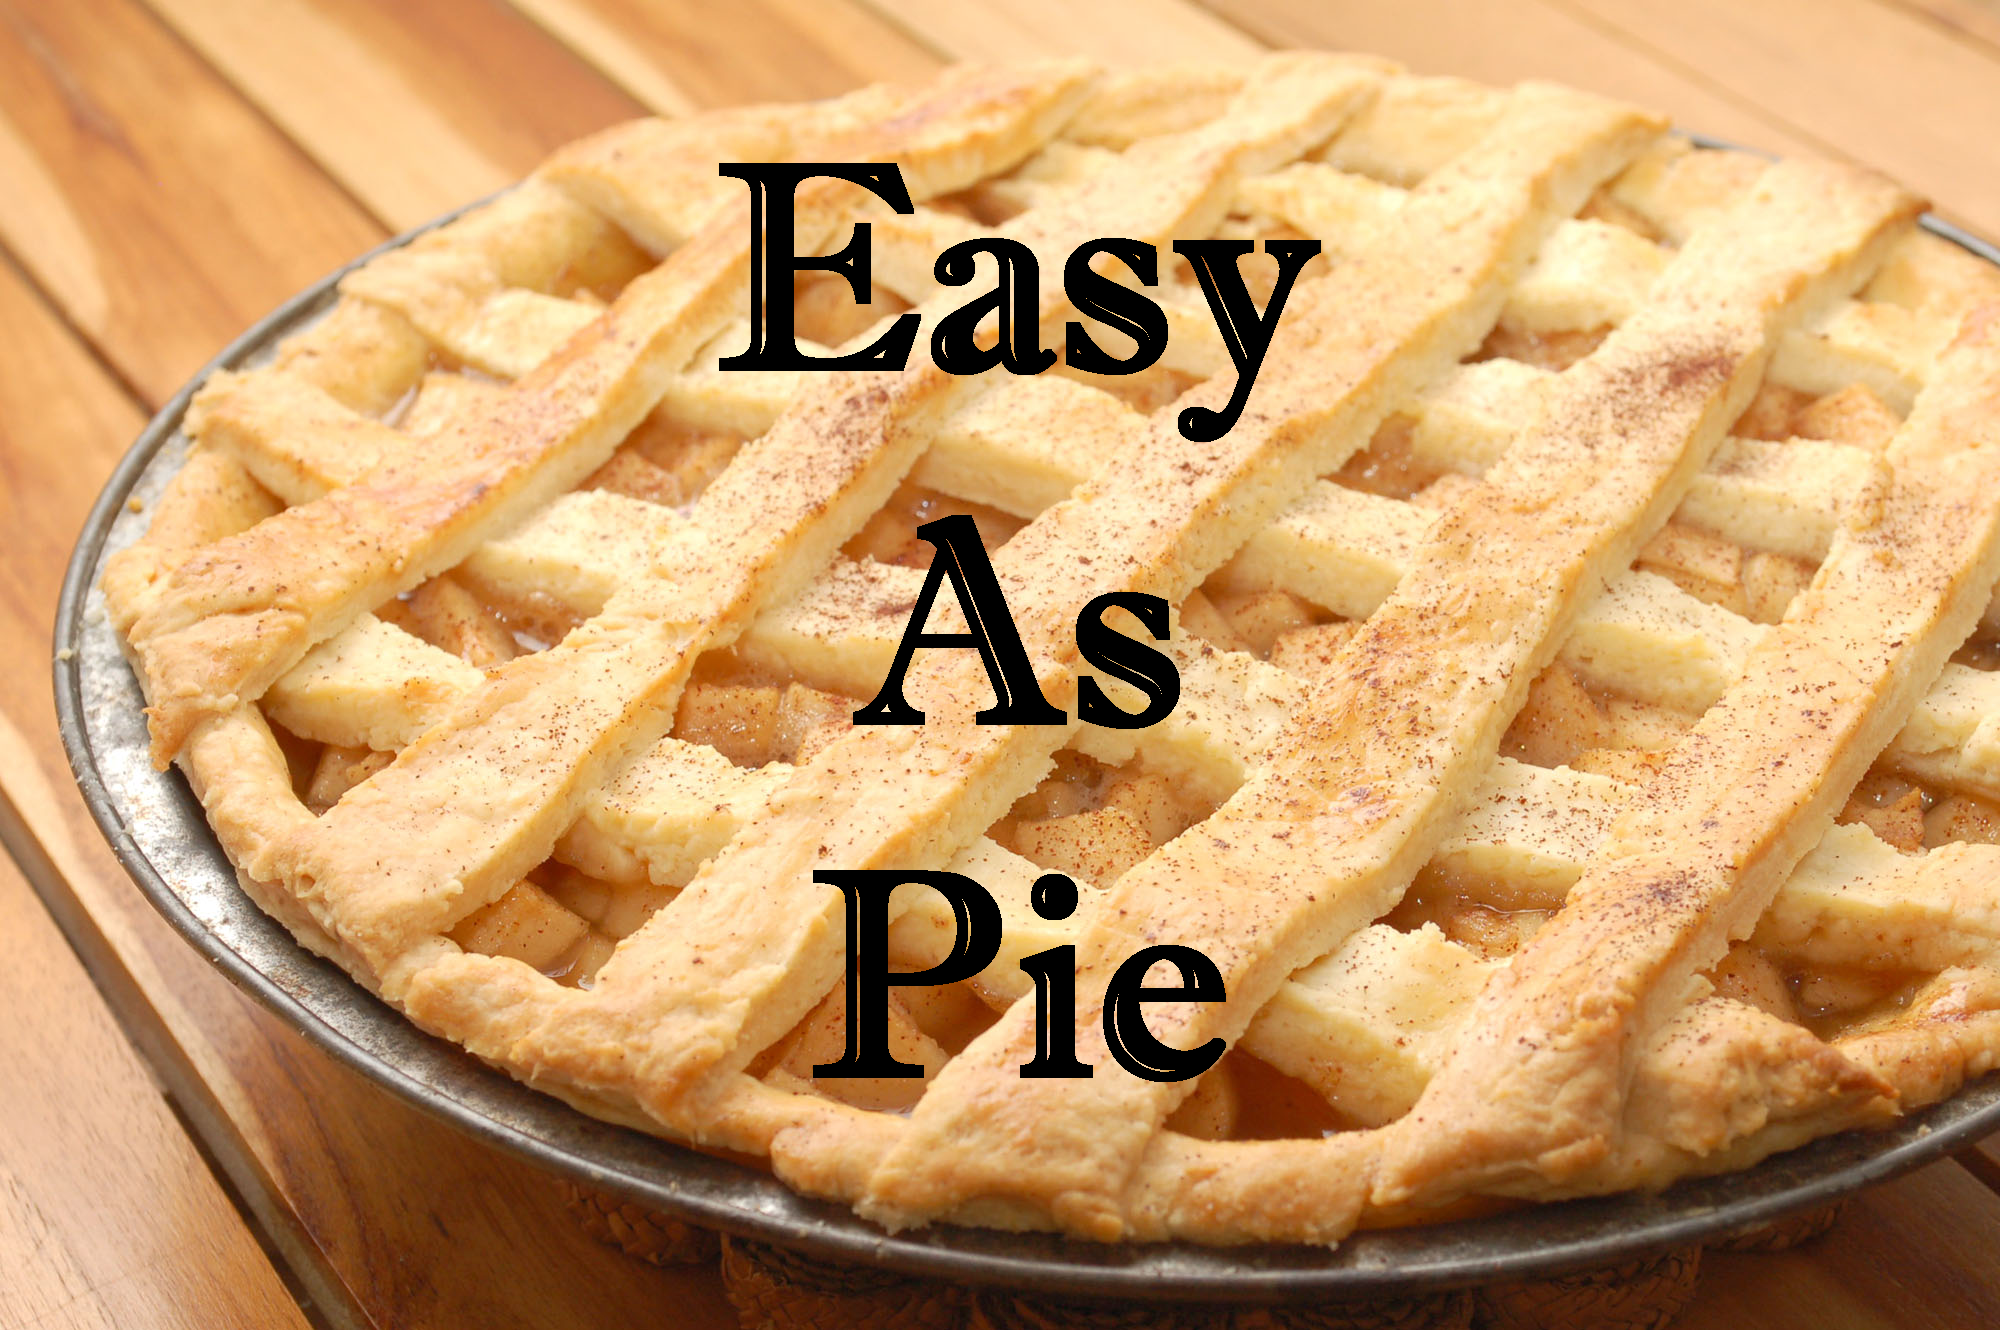 Easy easily. As easy as Apple pie. Easy as pie идиома. It is easy as pie. ITEAM pie.